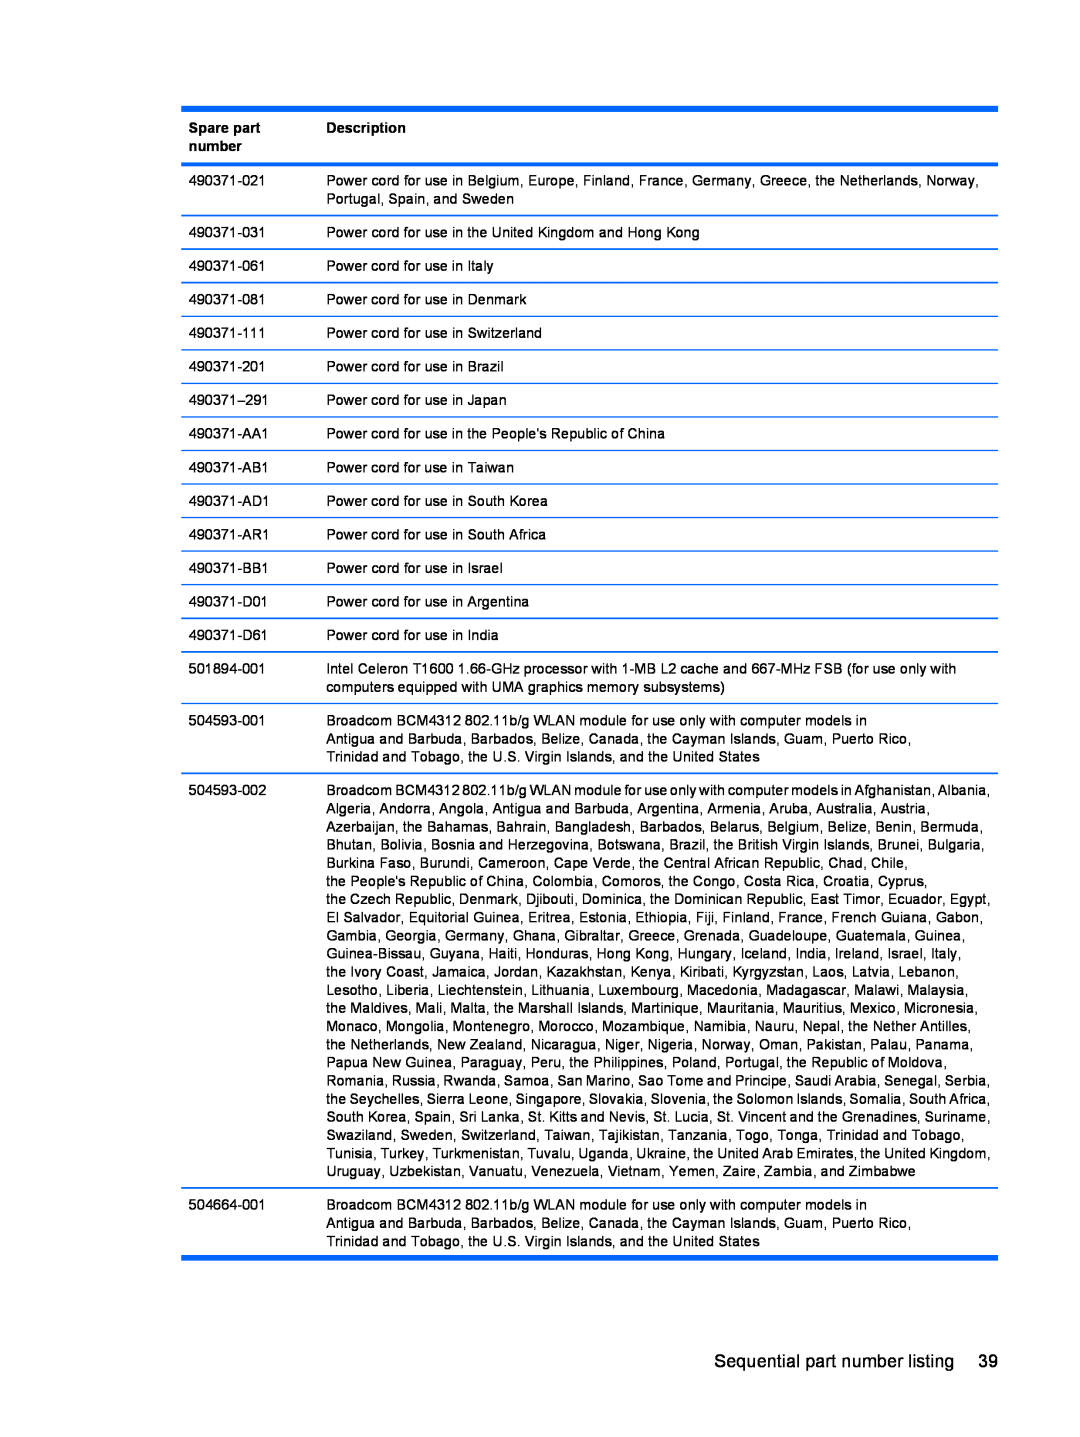 HP DV6 manual Sequential part number listing, Spare part, Description 